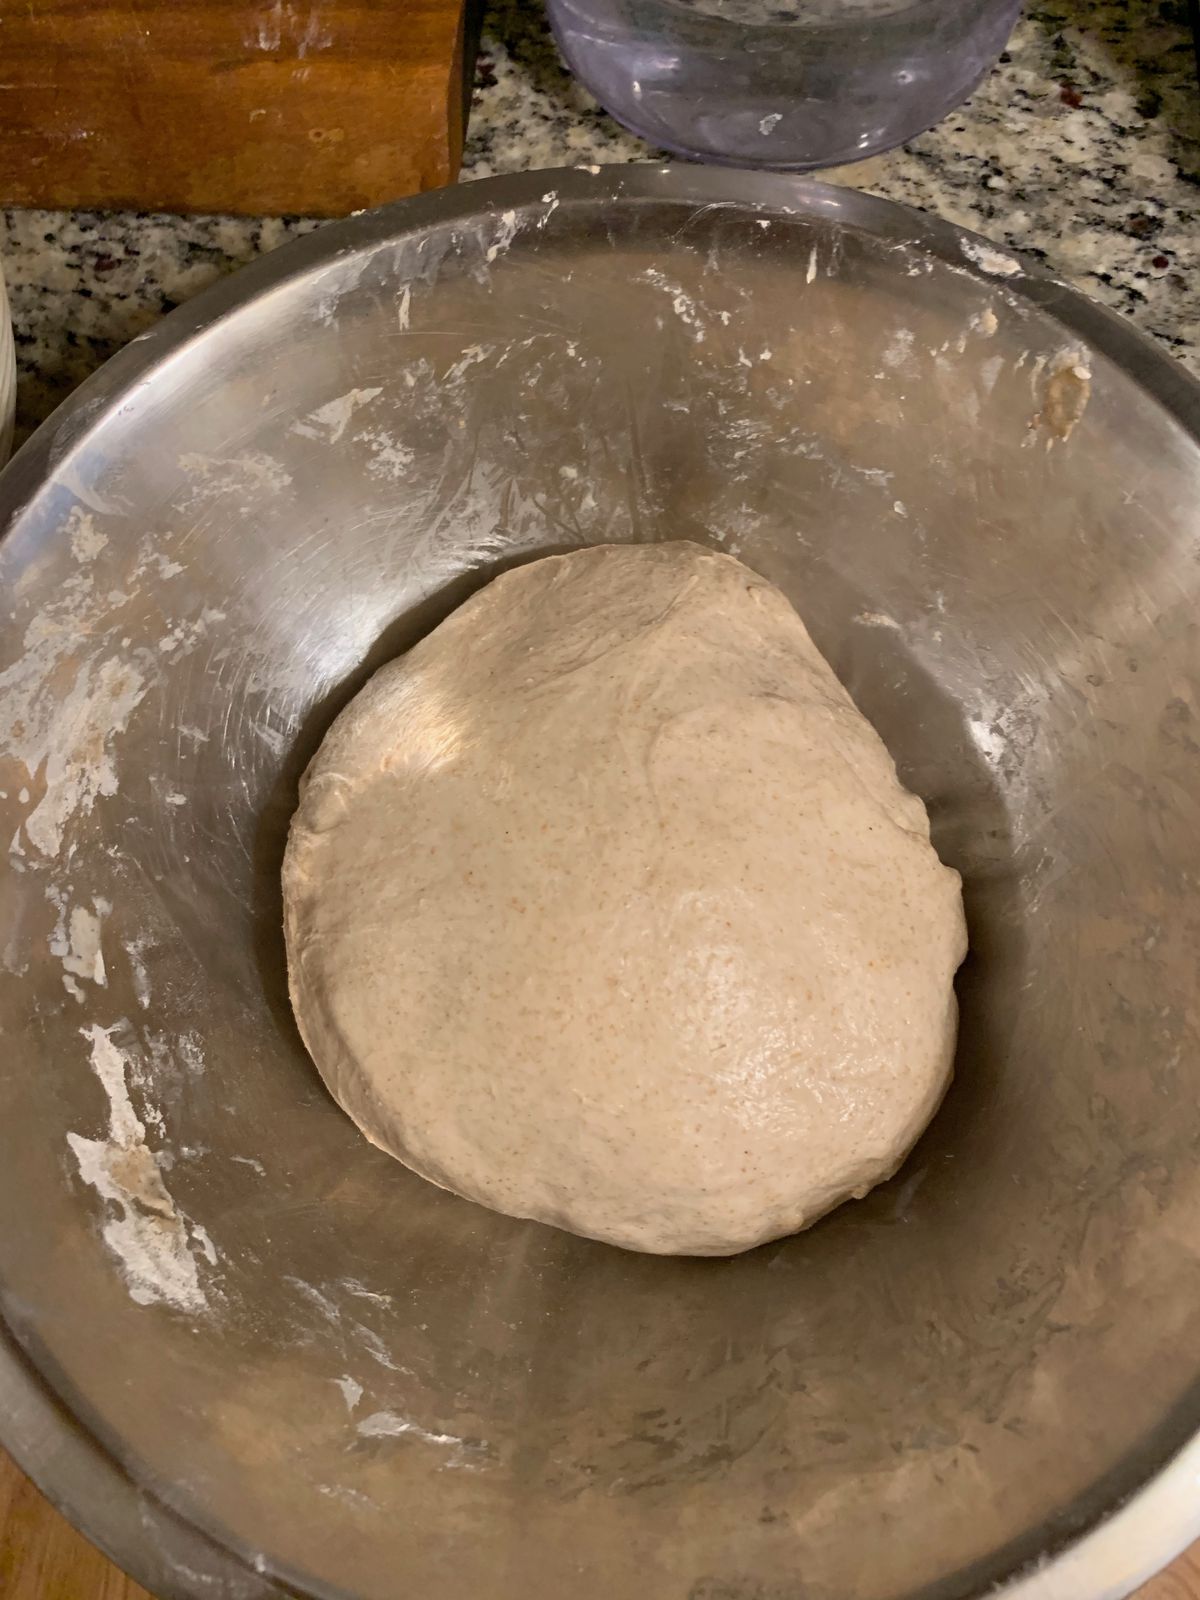 Bread dough in a metal bowl.